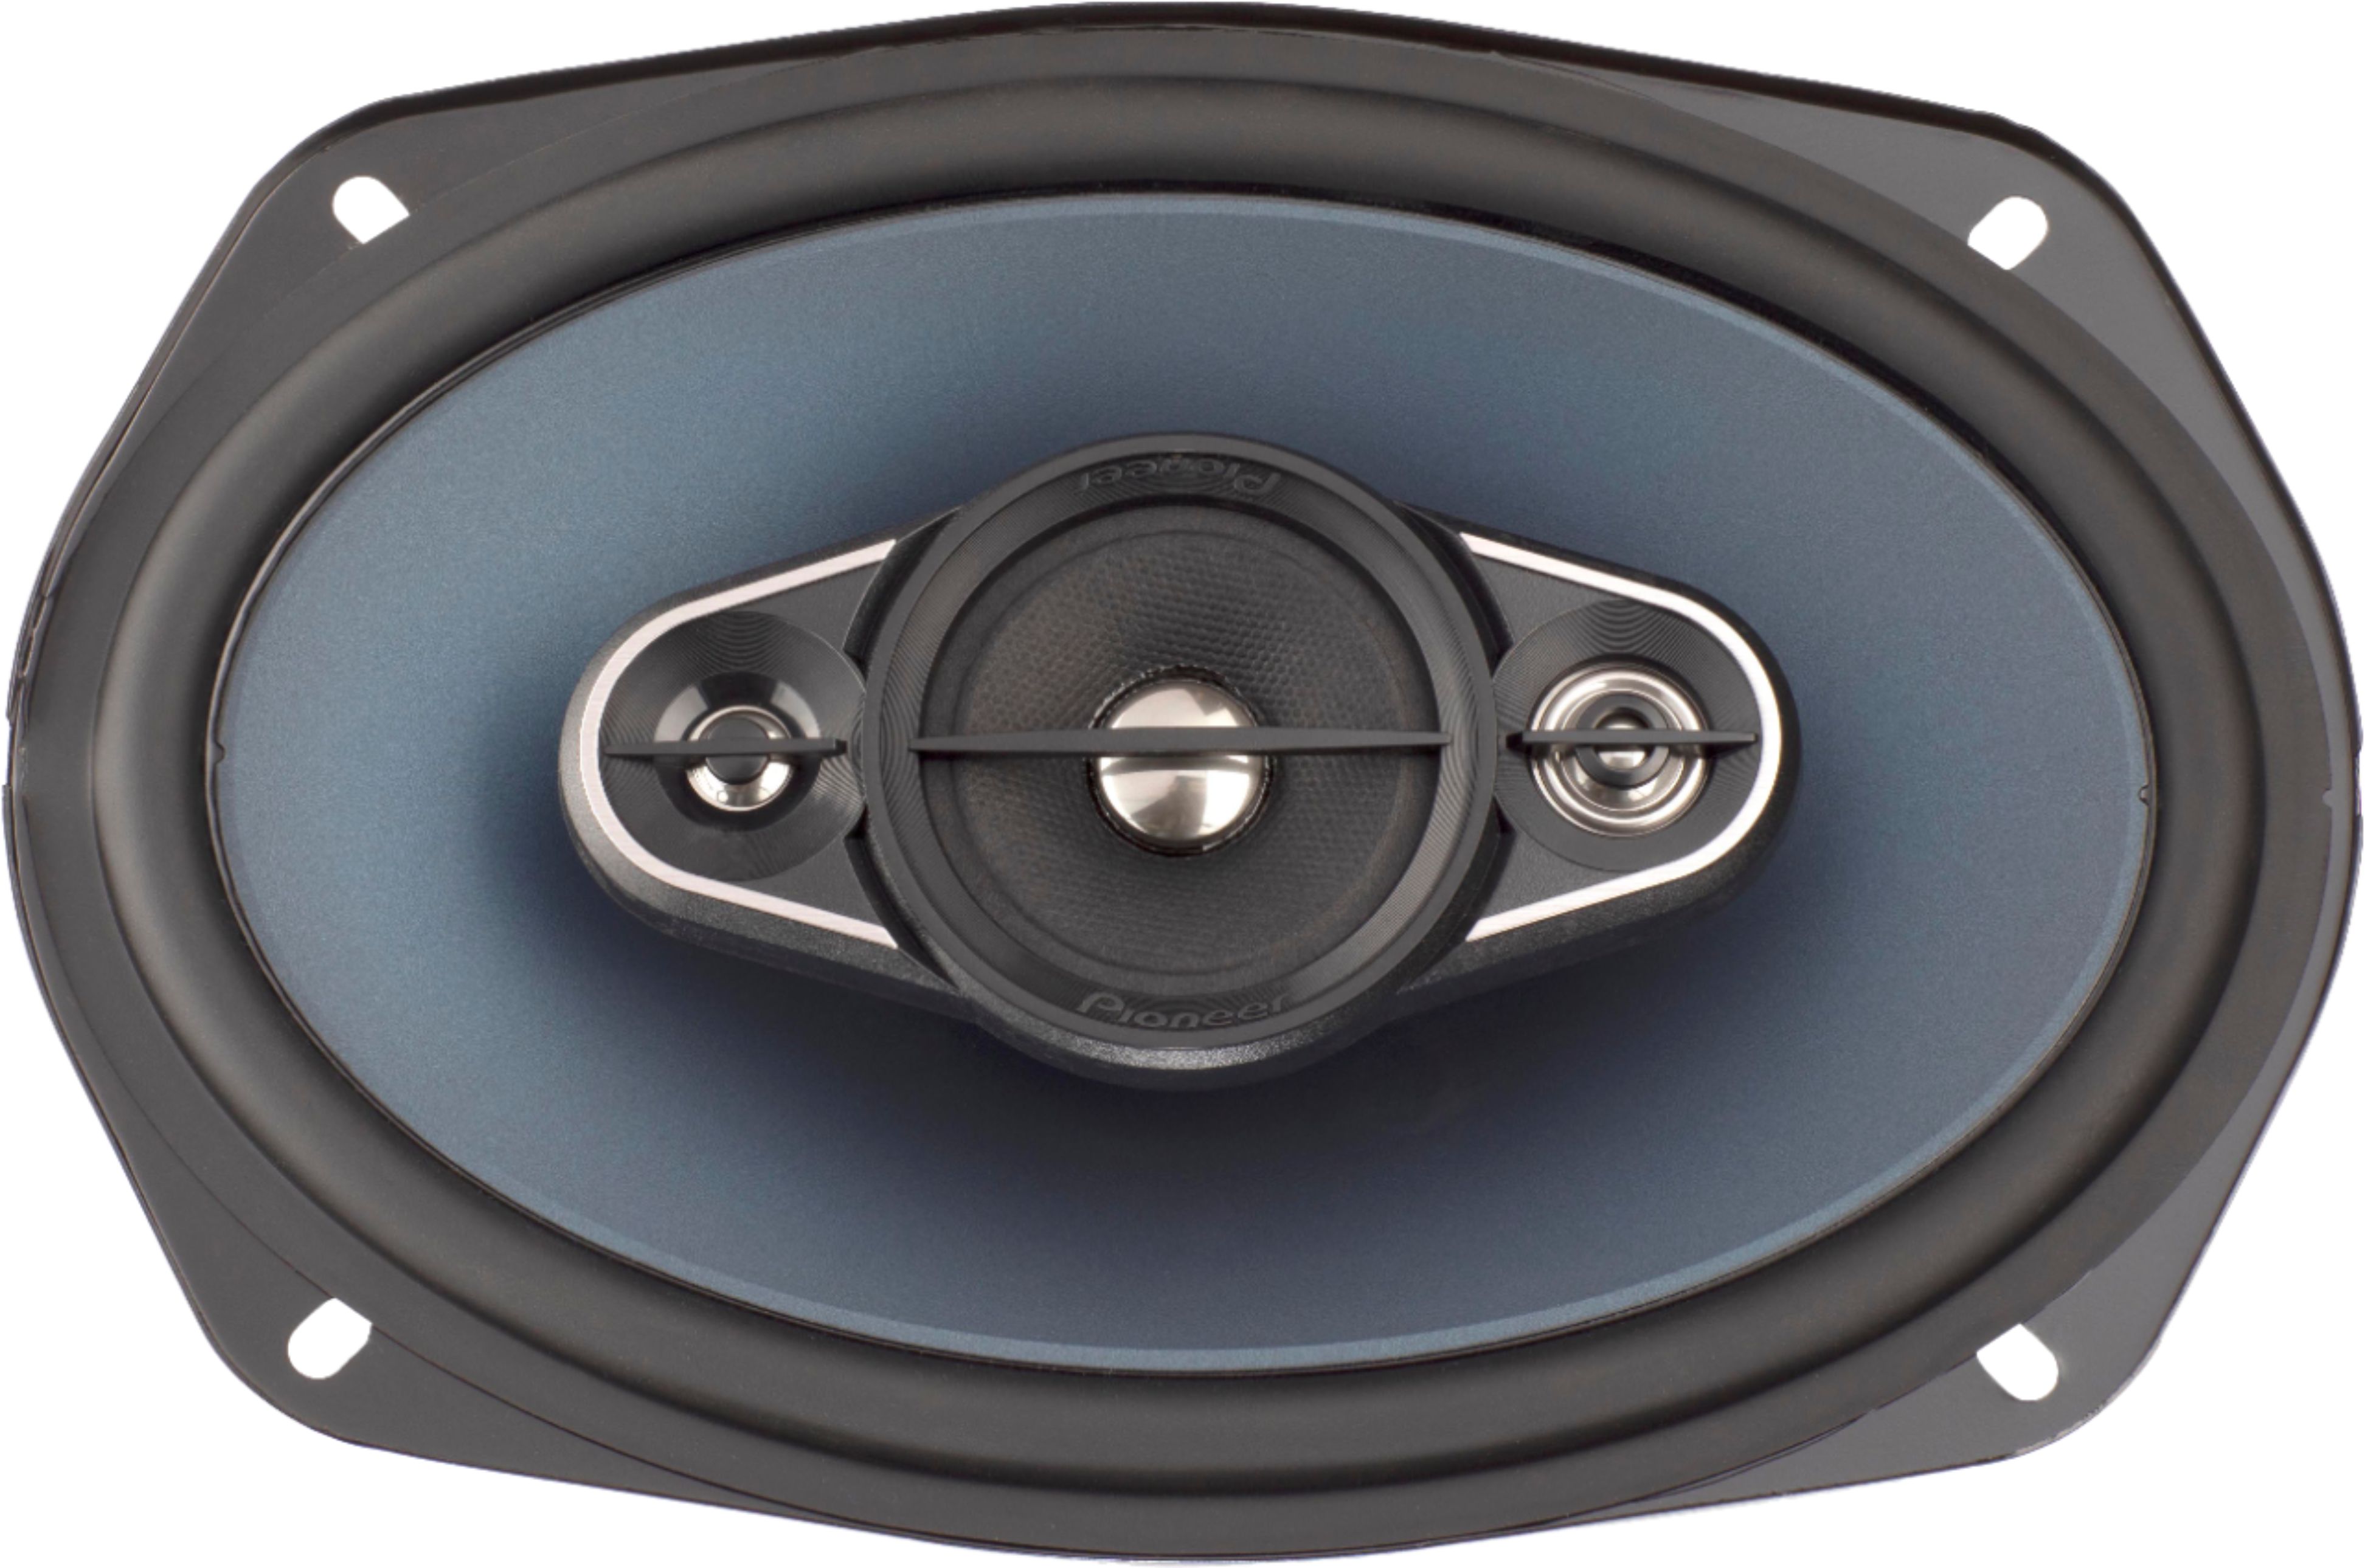 2 pcs 6X9 inch 6" X 9" Car audio woofer bass loudspeaker speaker foam surrounds 